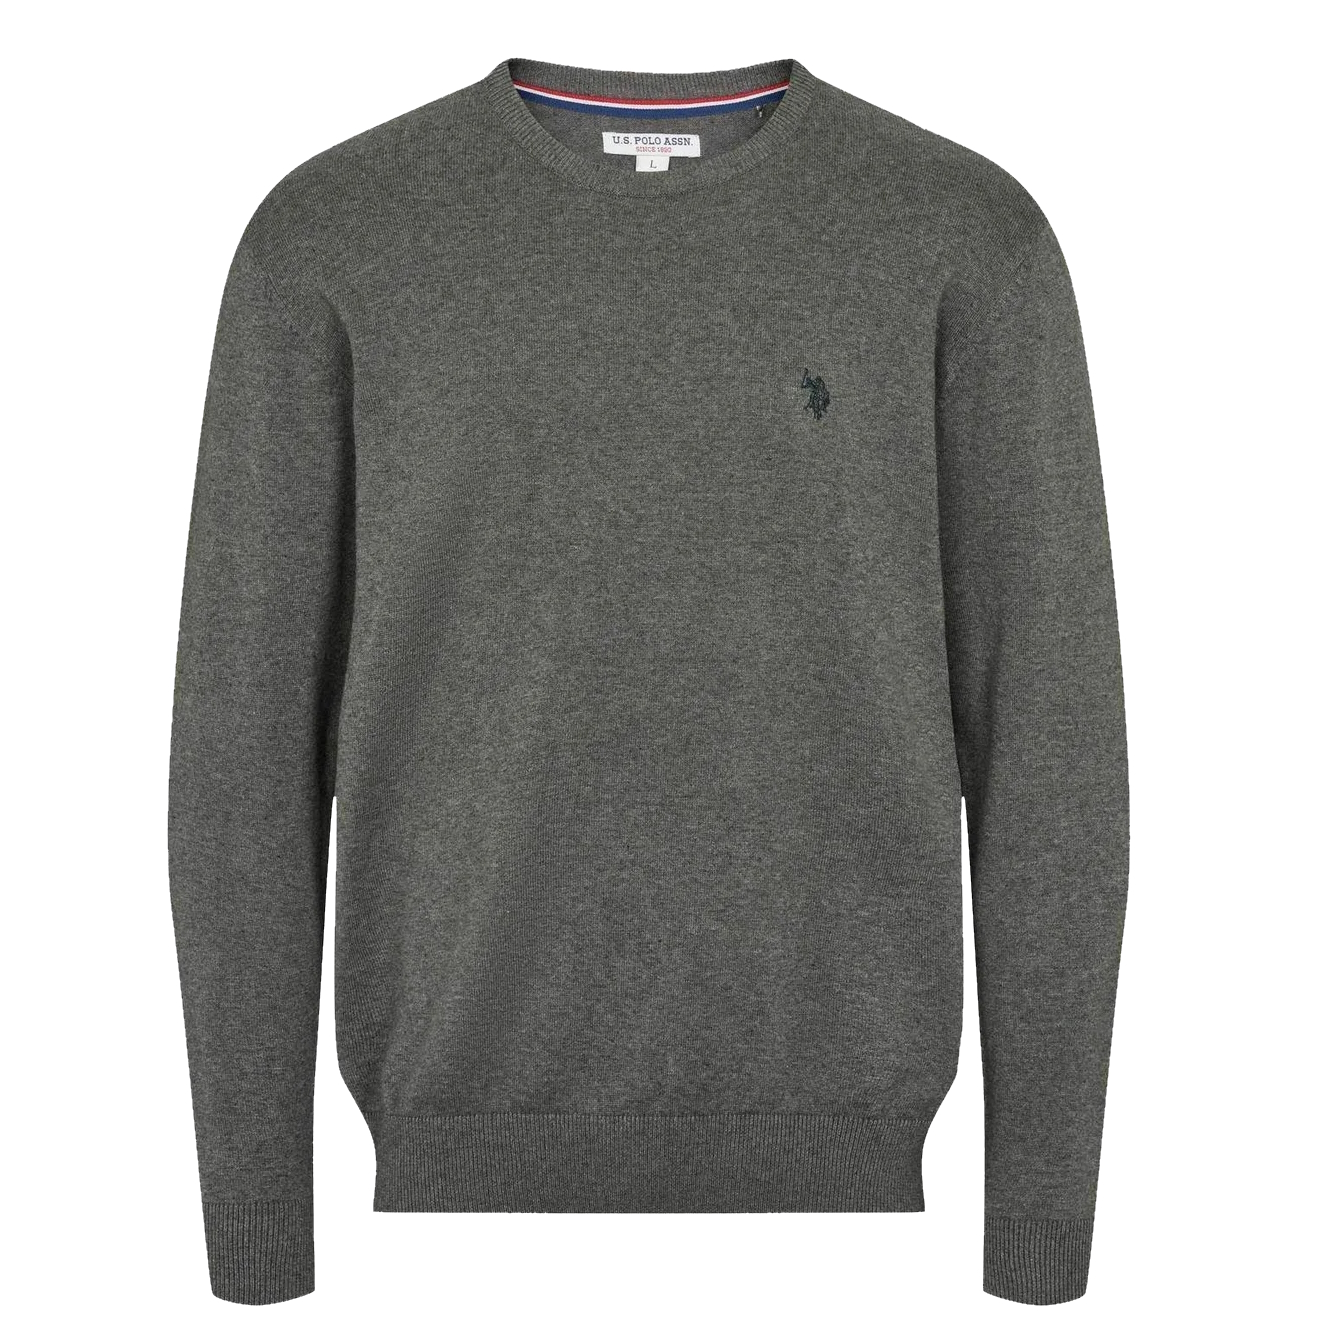 Se US Polo Adair Sweater, strik grå - M hos Fashionhero.dk